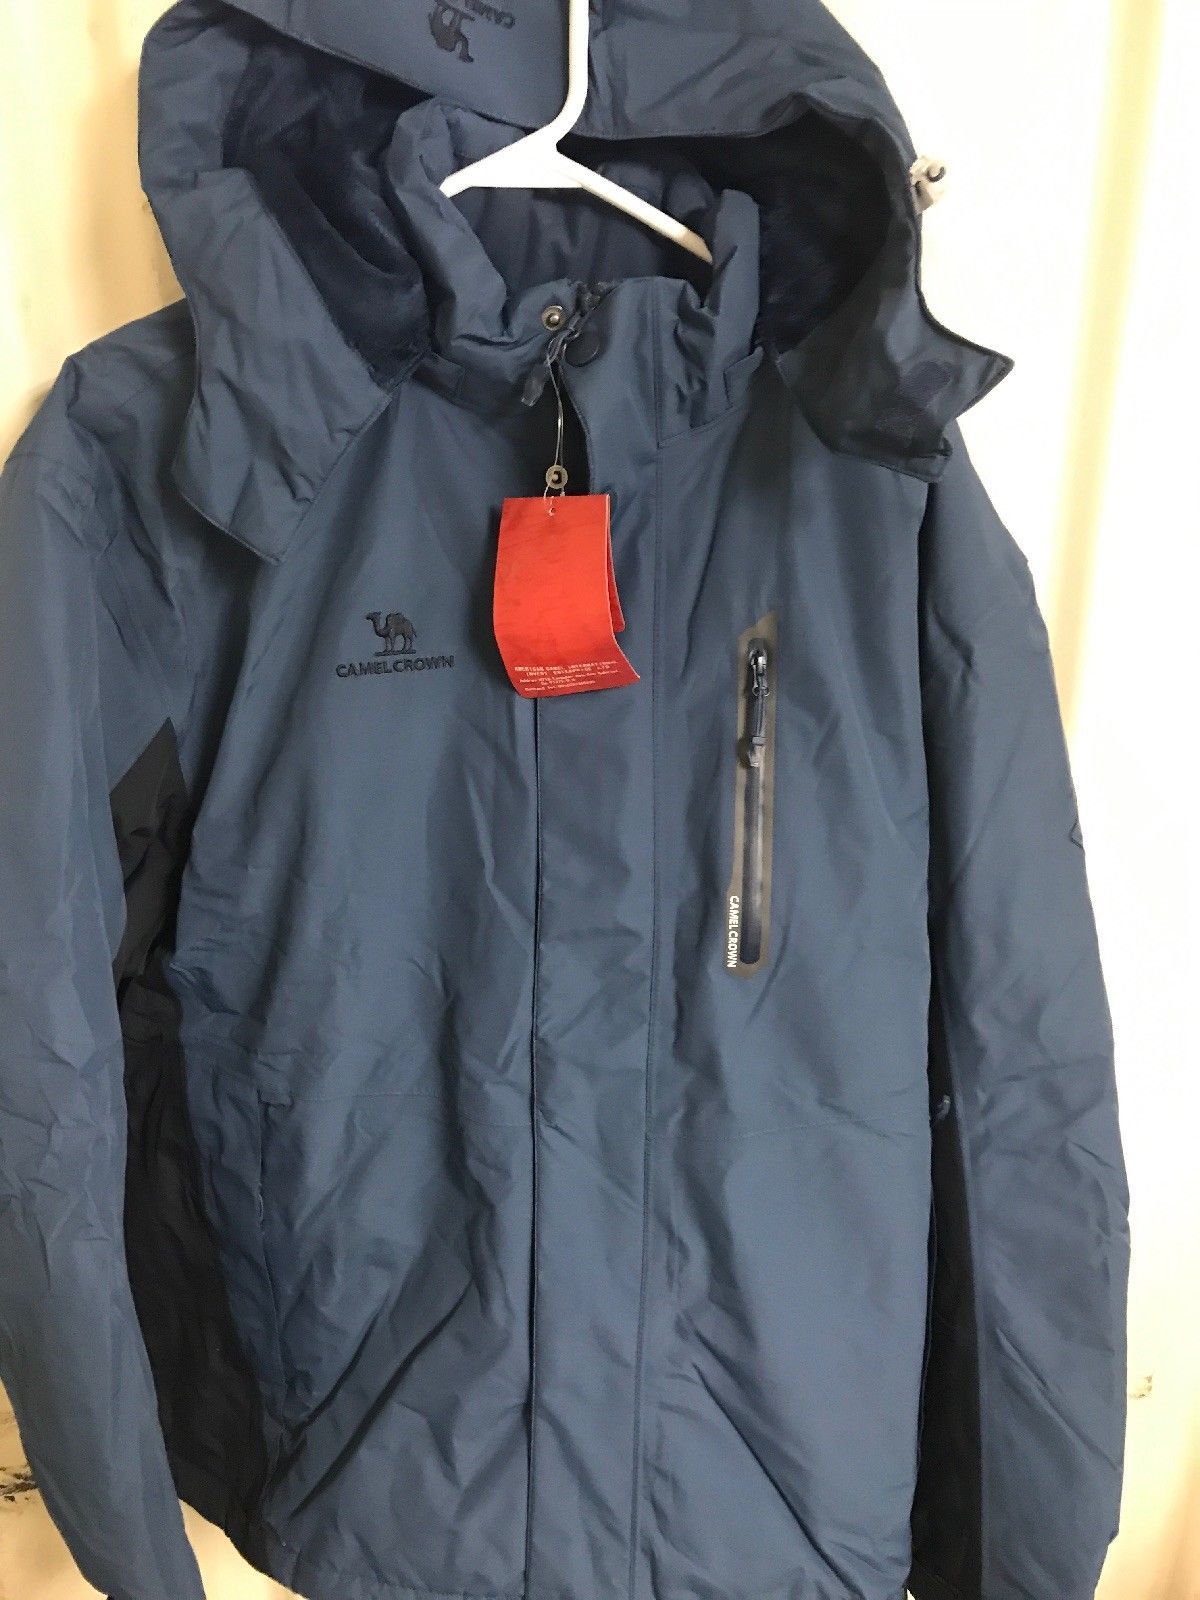 CAMEL CROWN Ski Jacket Men Waterproof Warm Cotton Winter Snow Coat ...